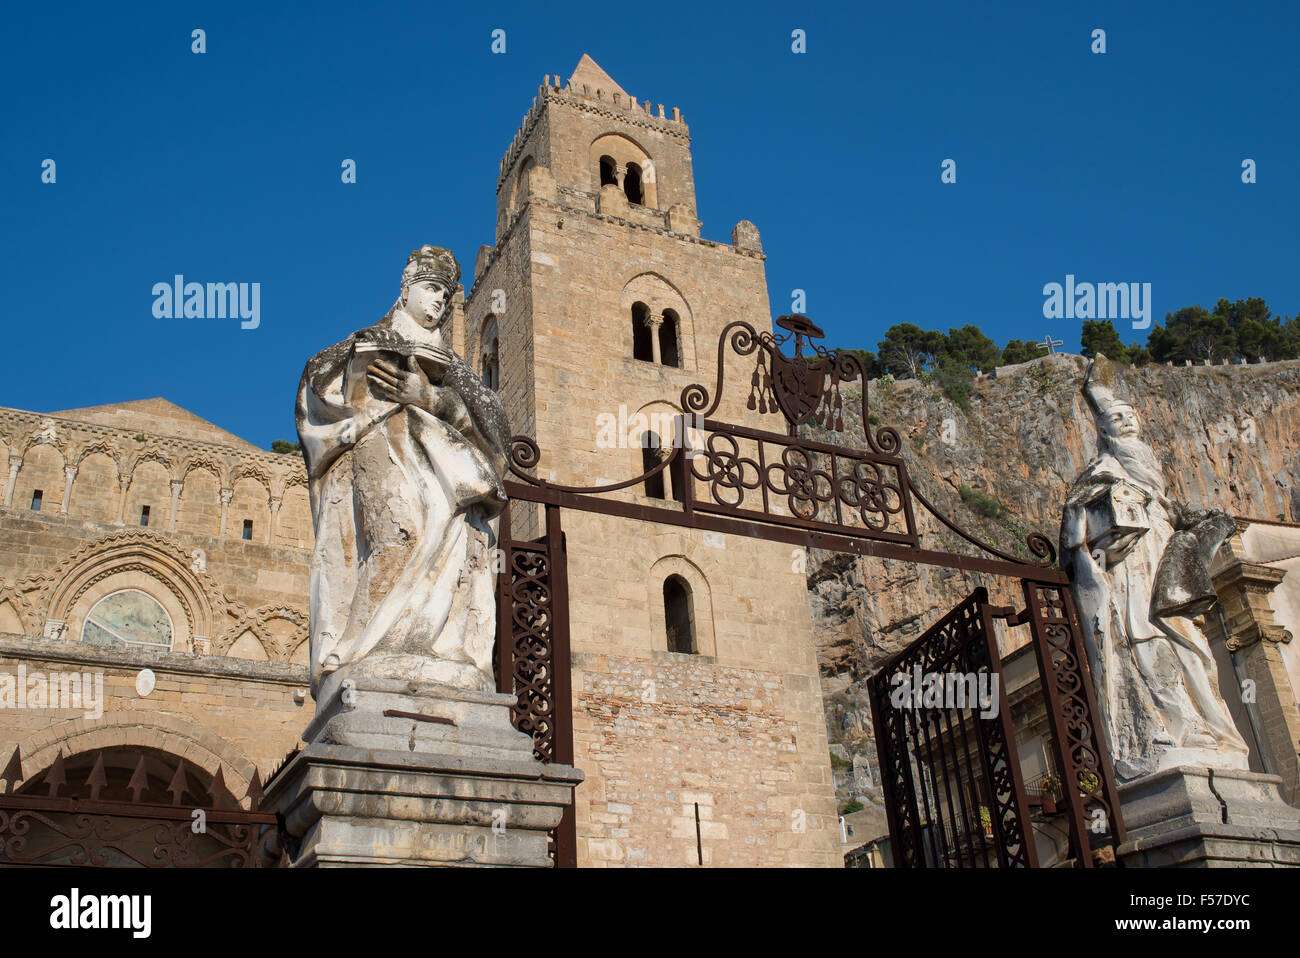 Principal facade of Cathedral Basilica of Cefalu, Sicily. Italy. Stock Photo